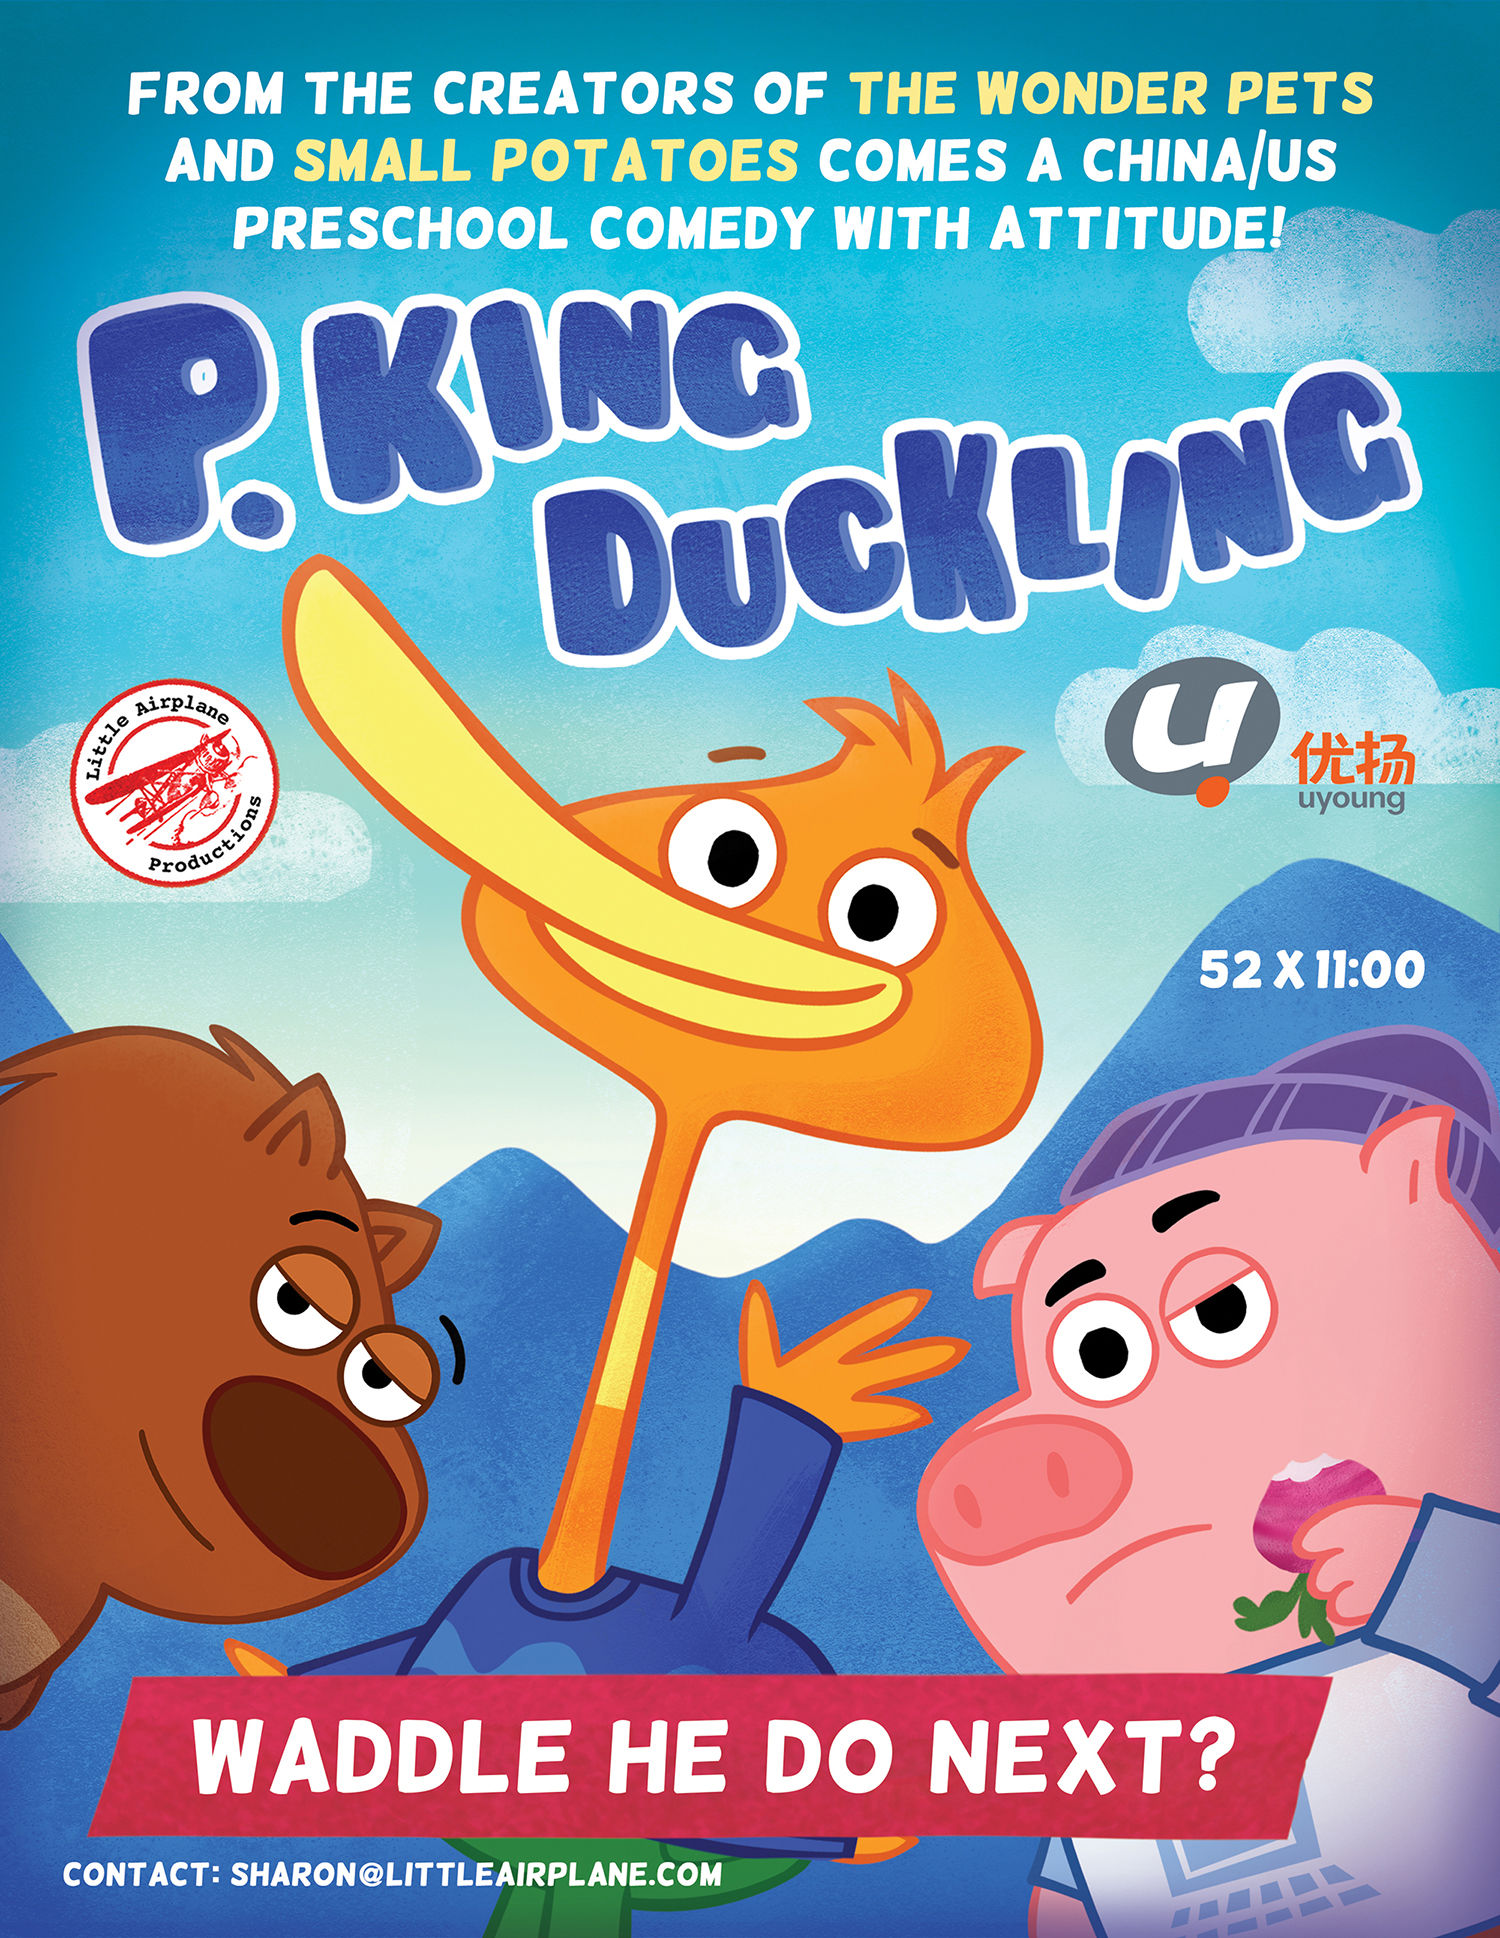 P. King Duckling ne zaman